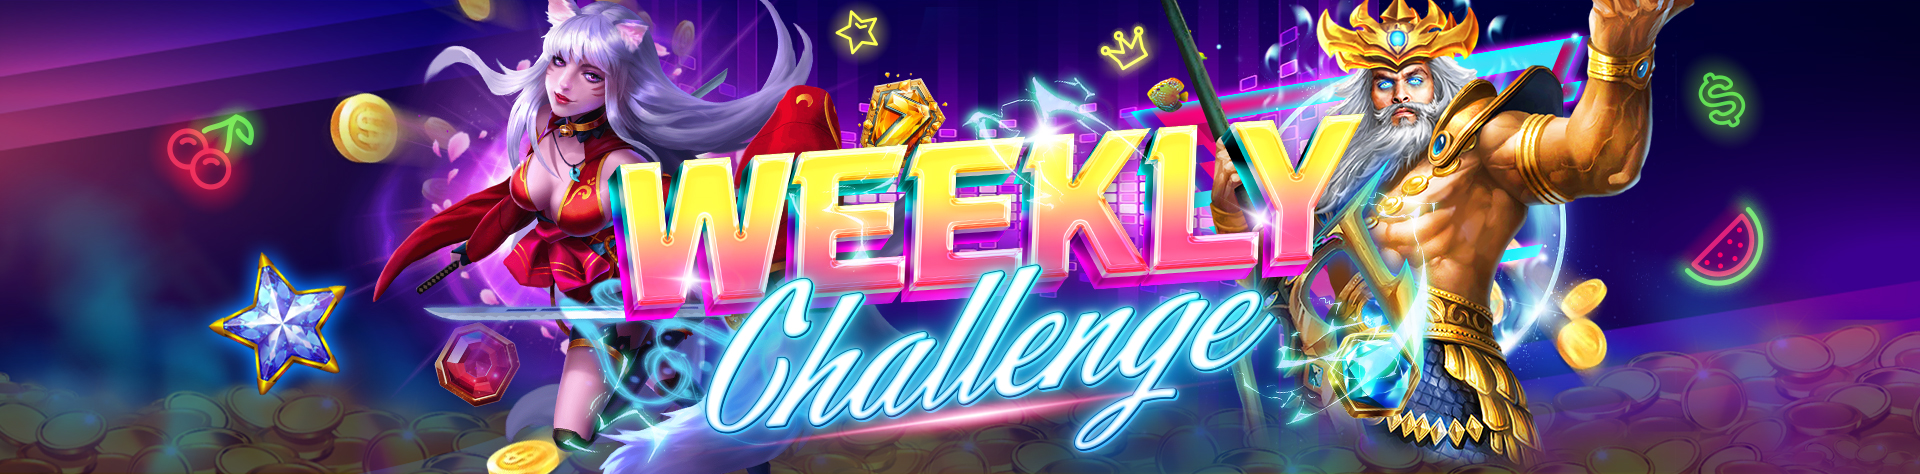 Weekly-challenge-(Main).jpg